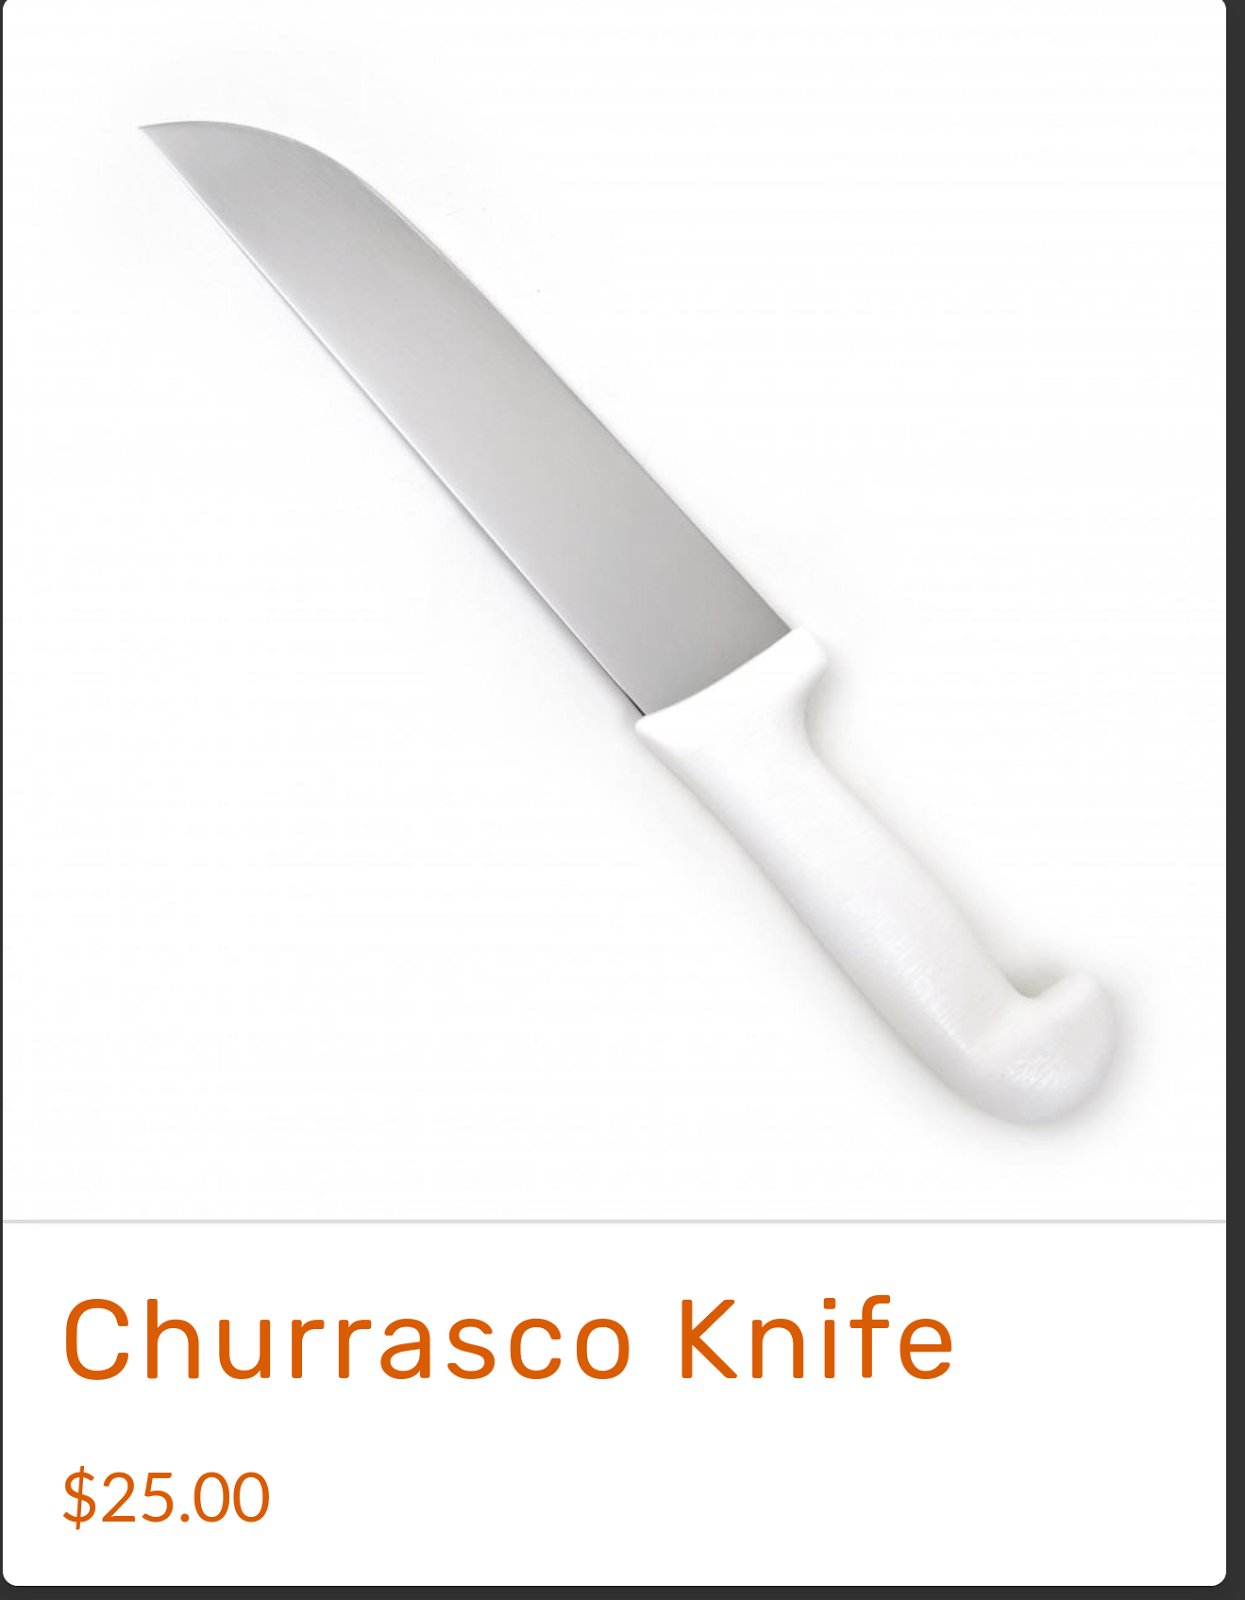 Brazilian Barbecue knife